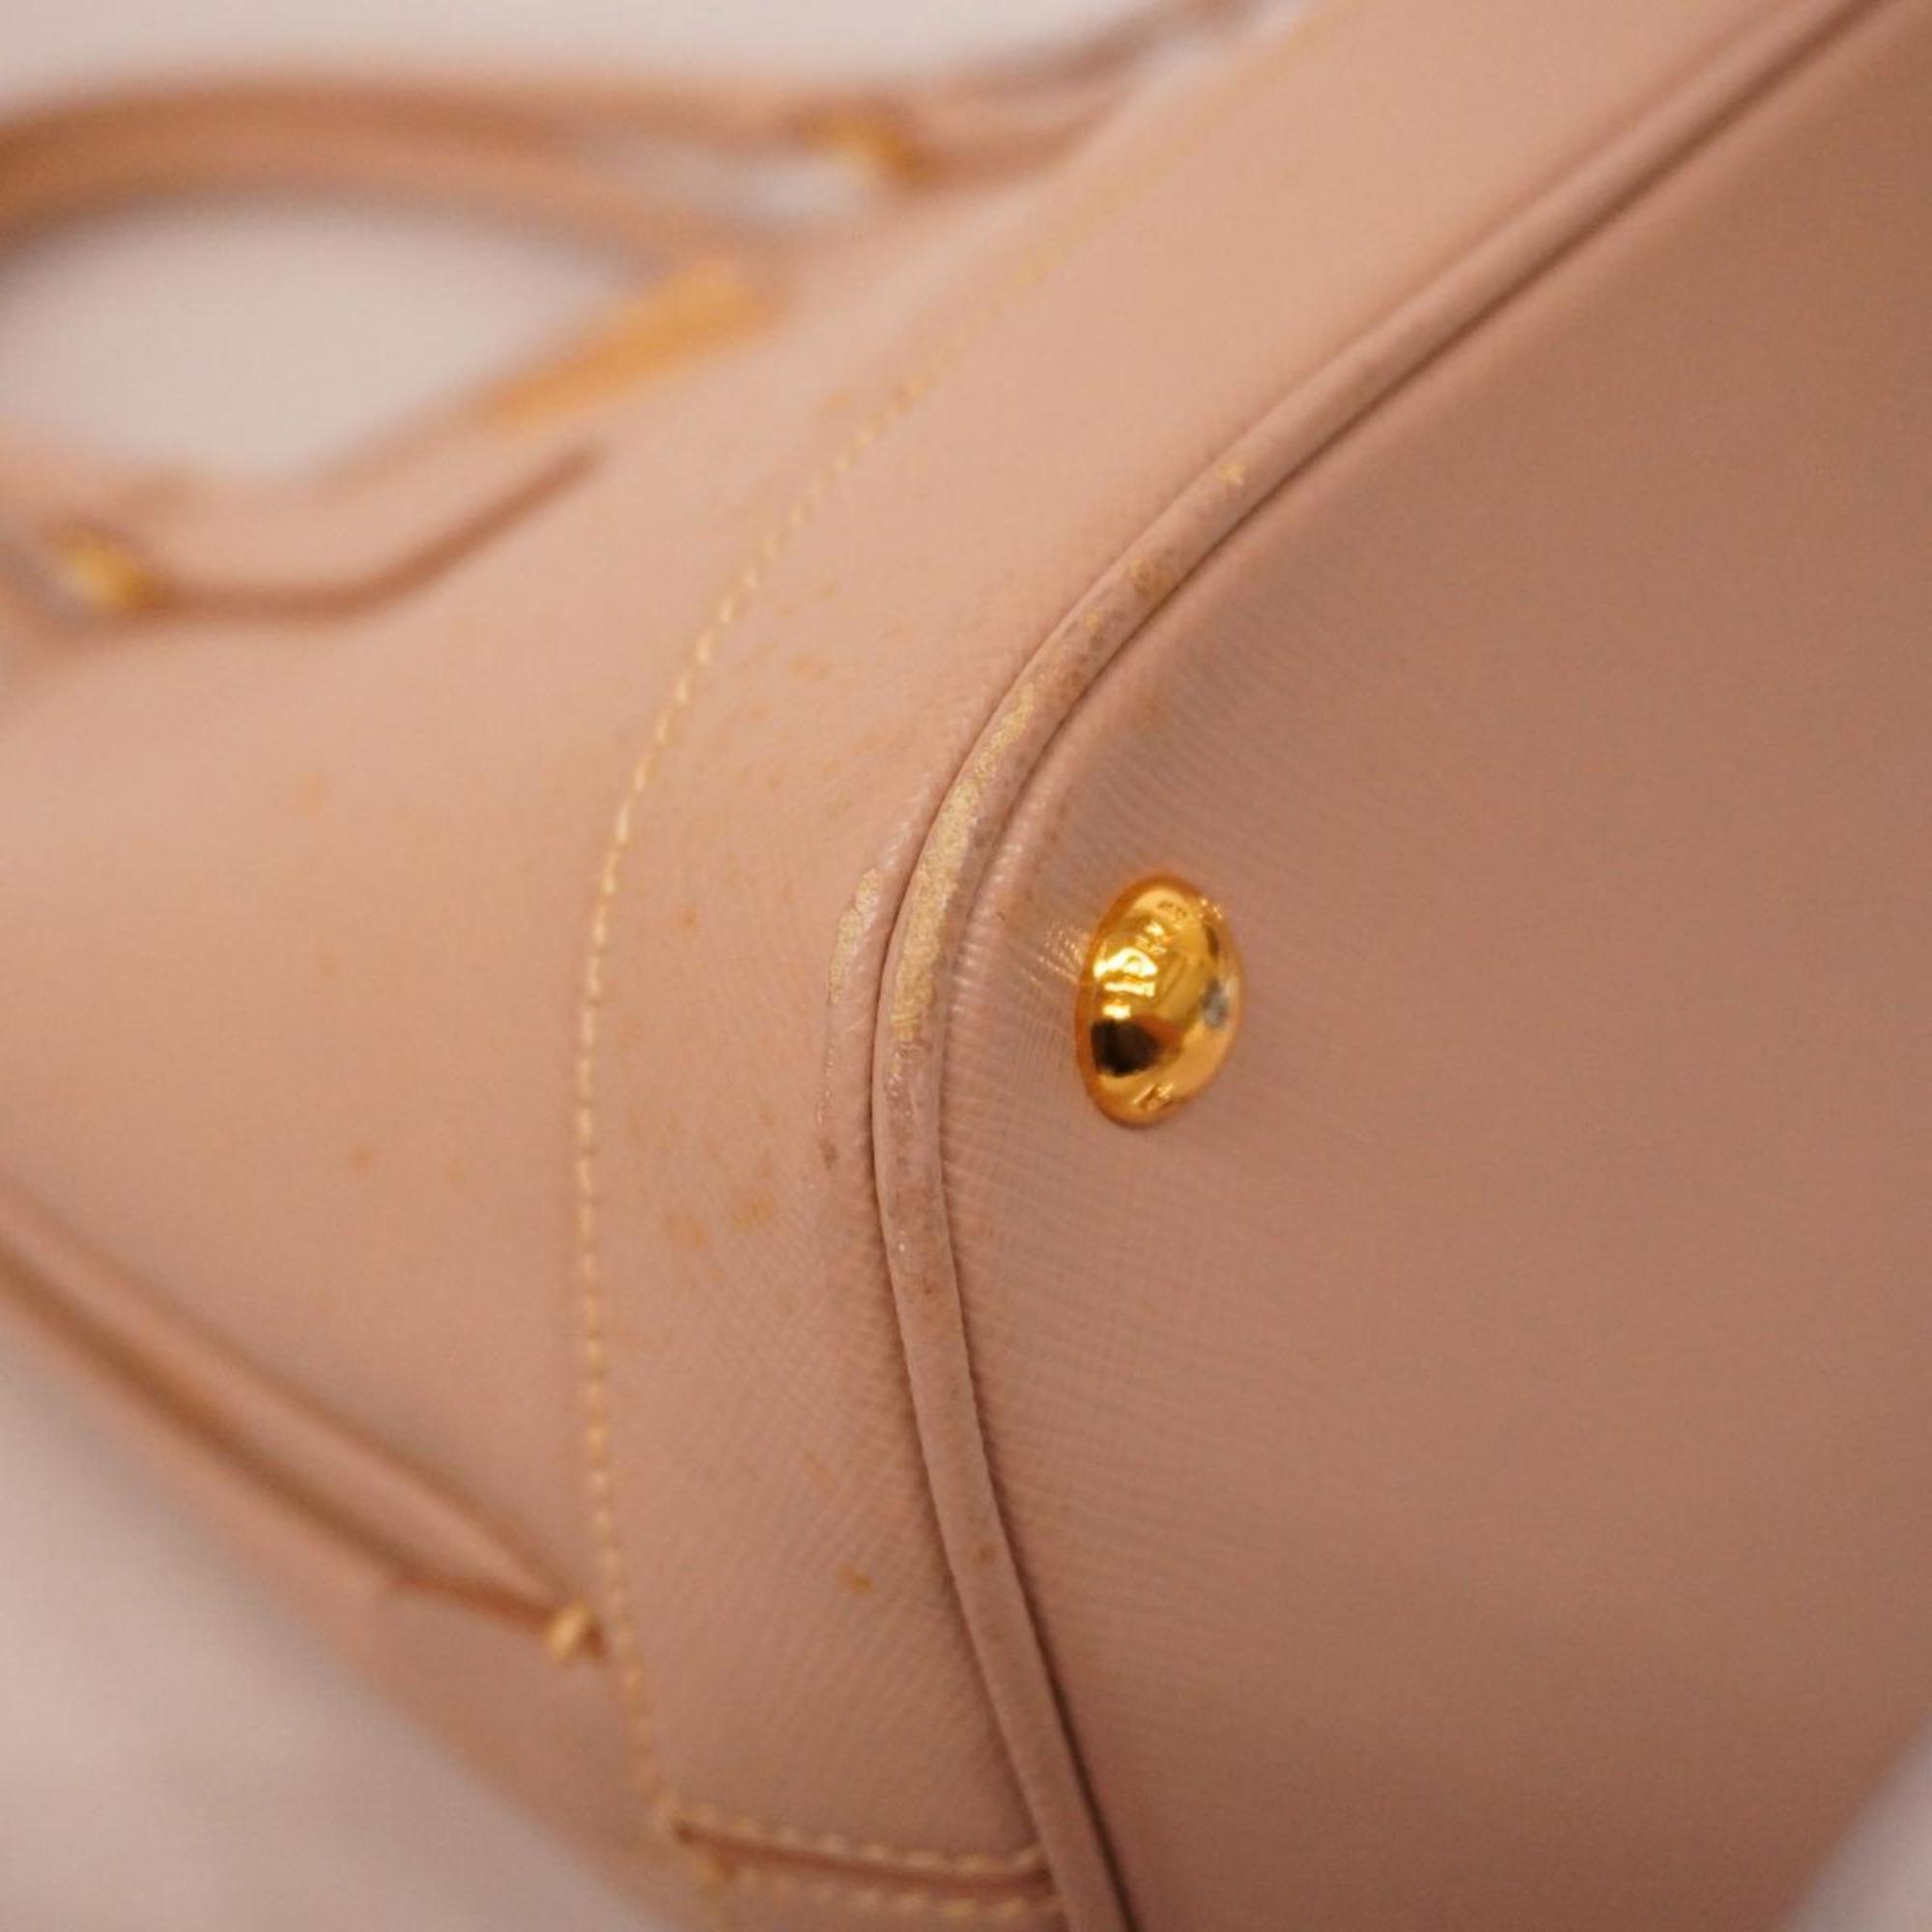 Prada handbag saffiano leather pink ladies